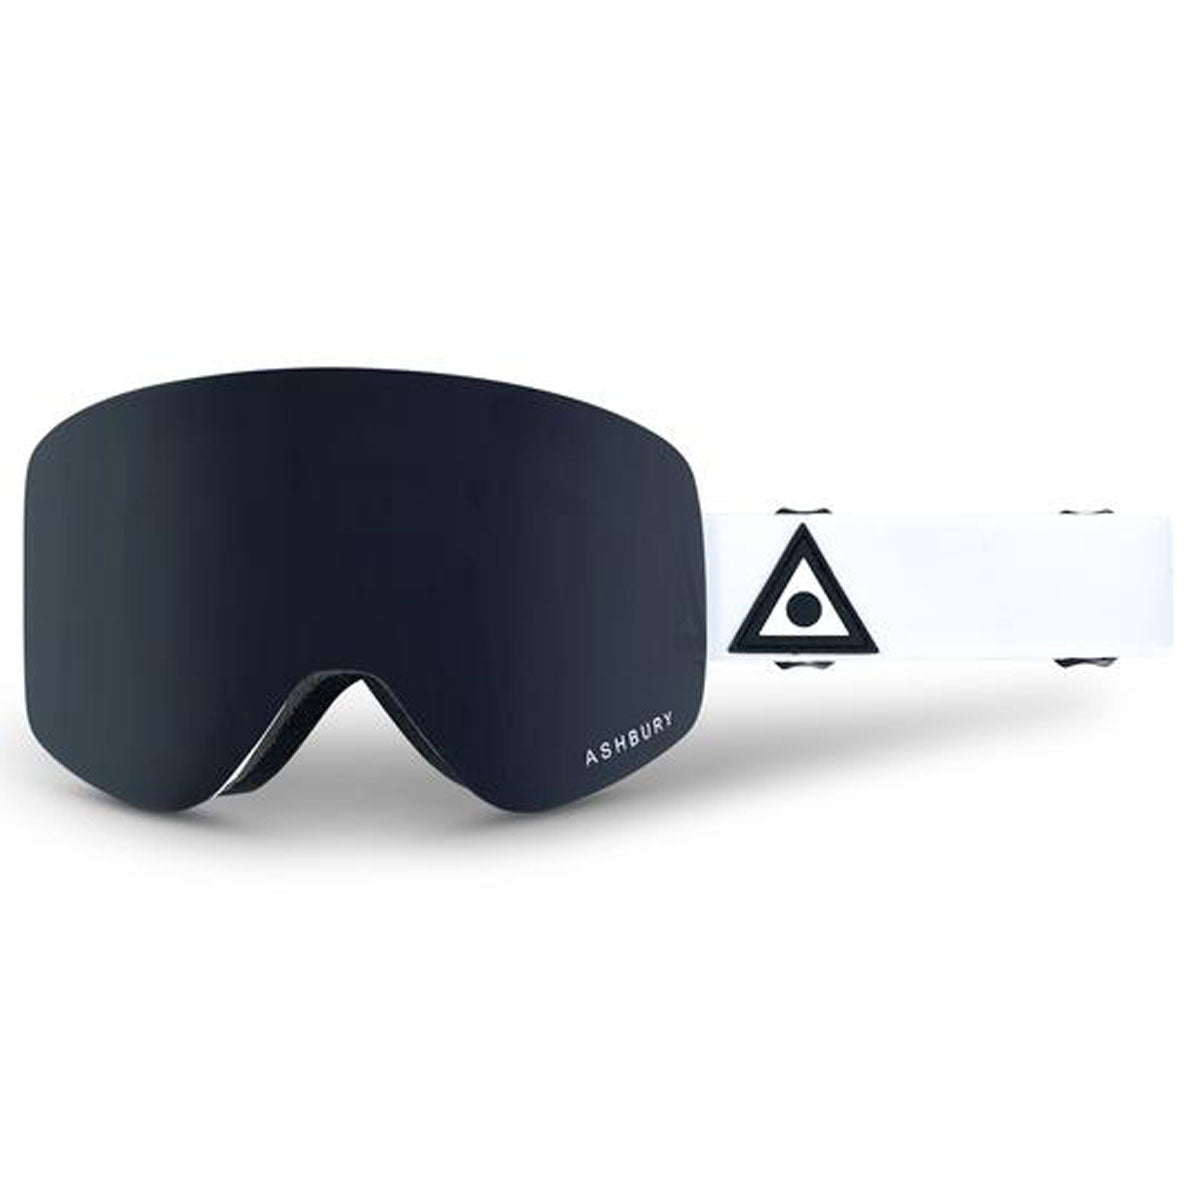 Ashbury Sonic White Triangle Snowboard Goggles - Dark Smoke/Yellow Spare image 1